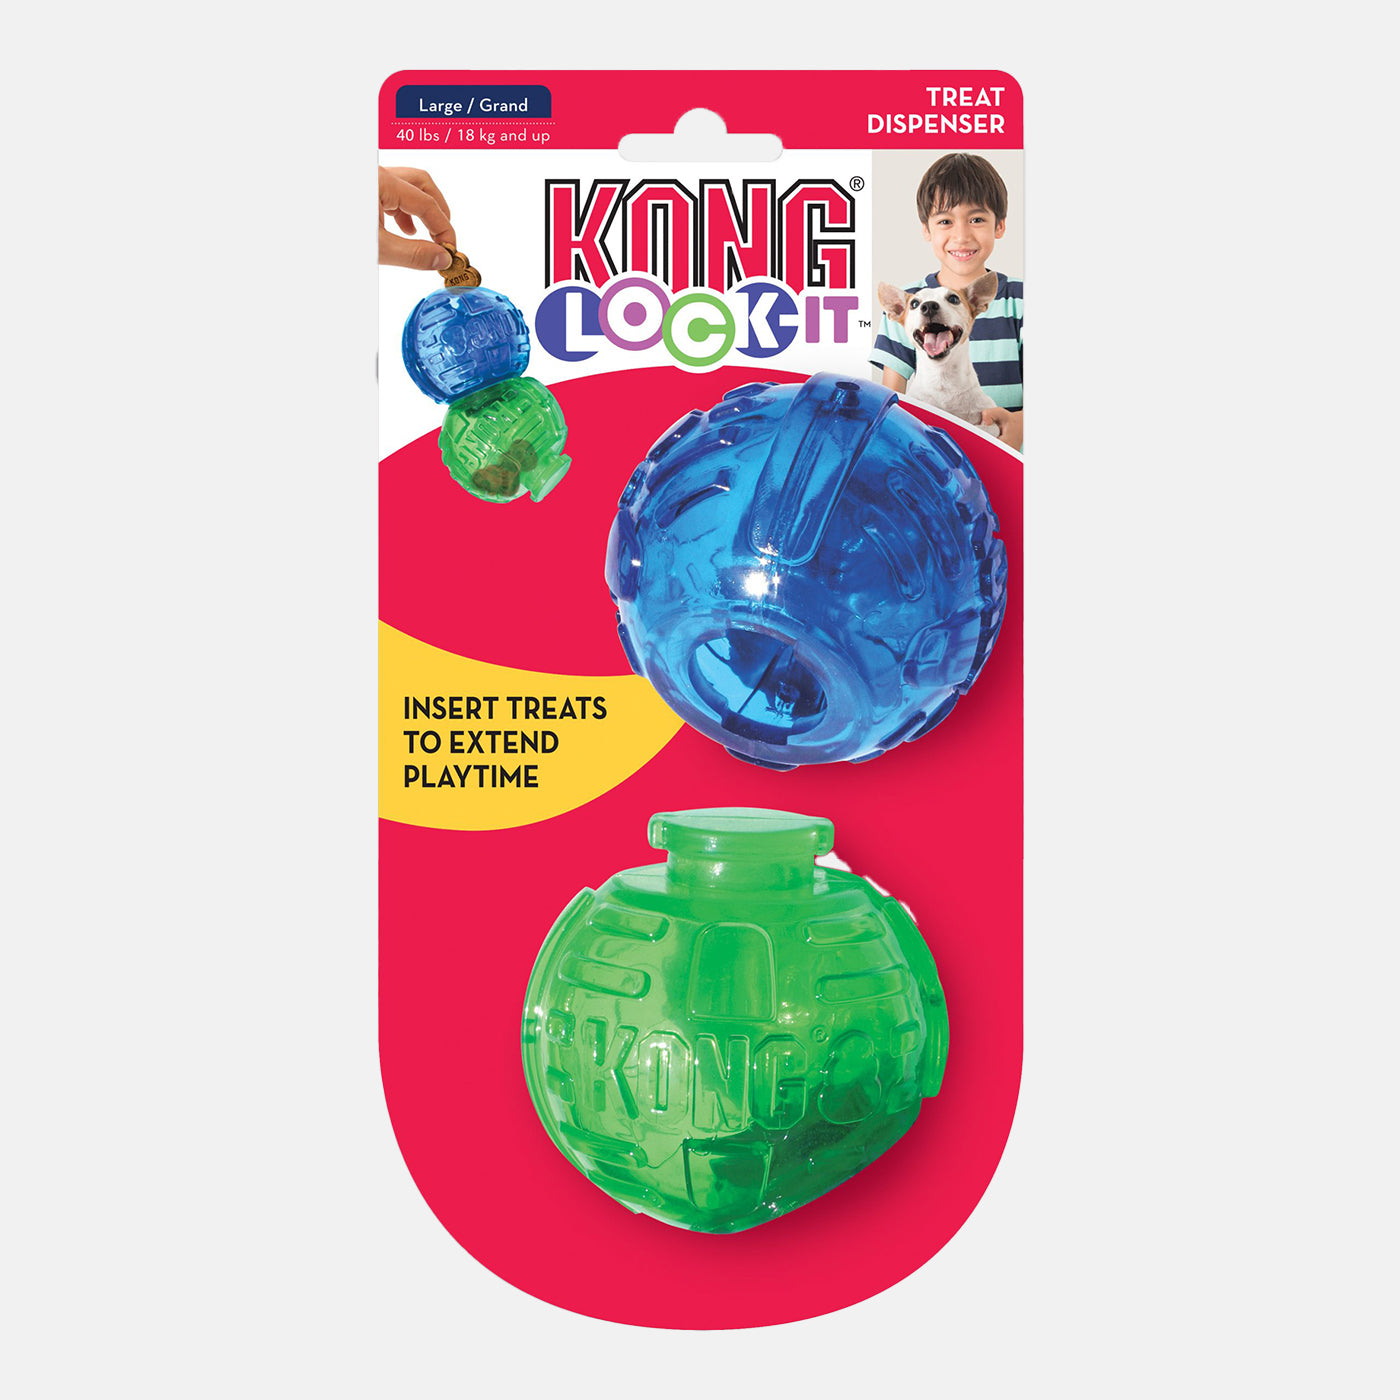 KONG Lock-It Balls